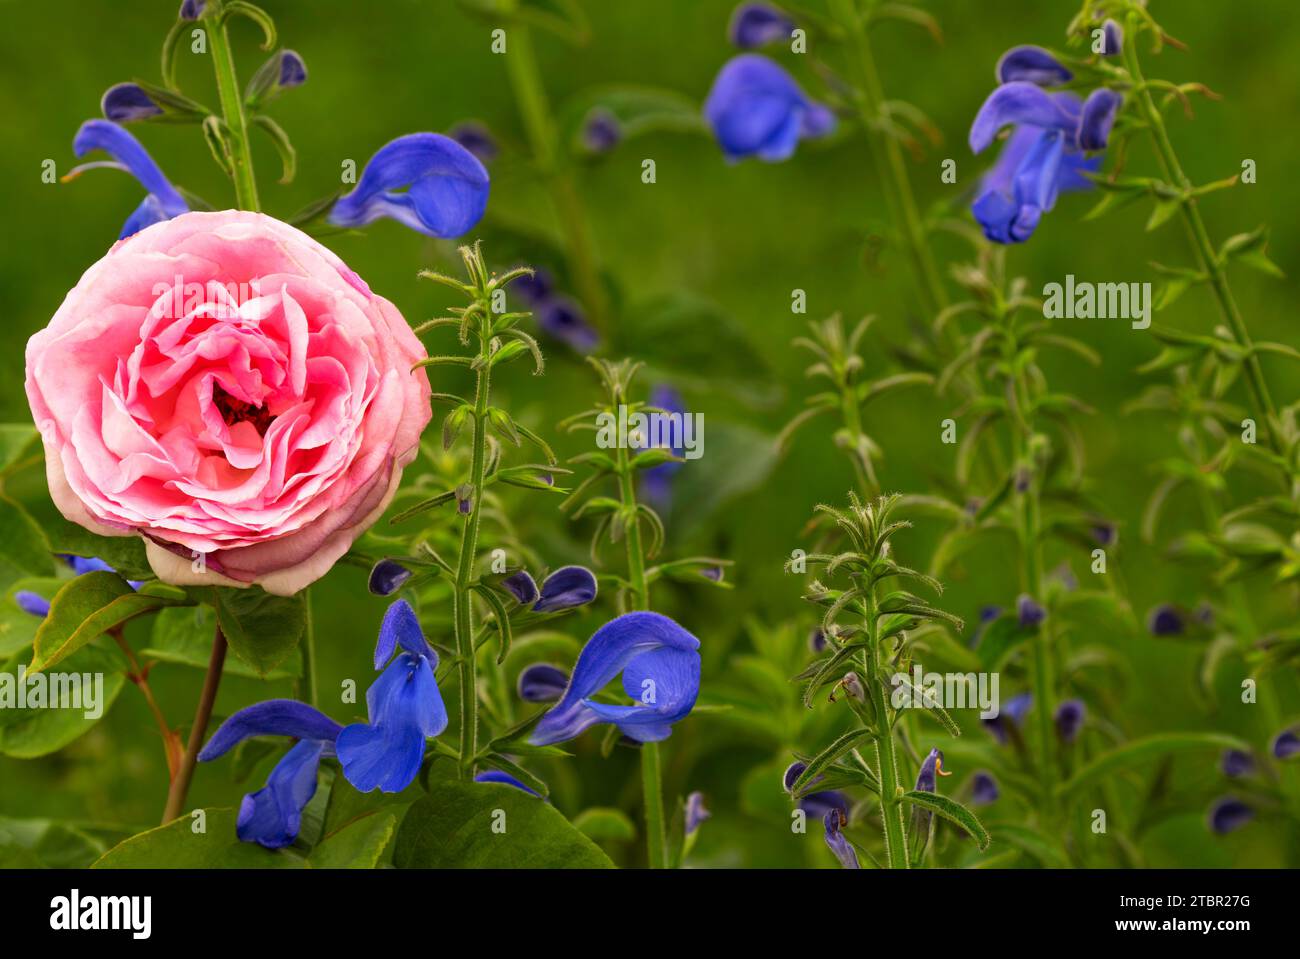 Elizabeth park rose garden hi-res stock photography and images - Alamy